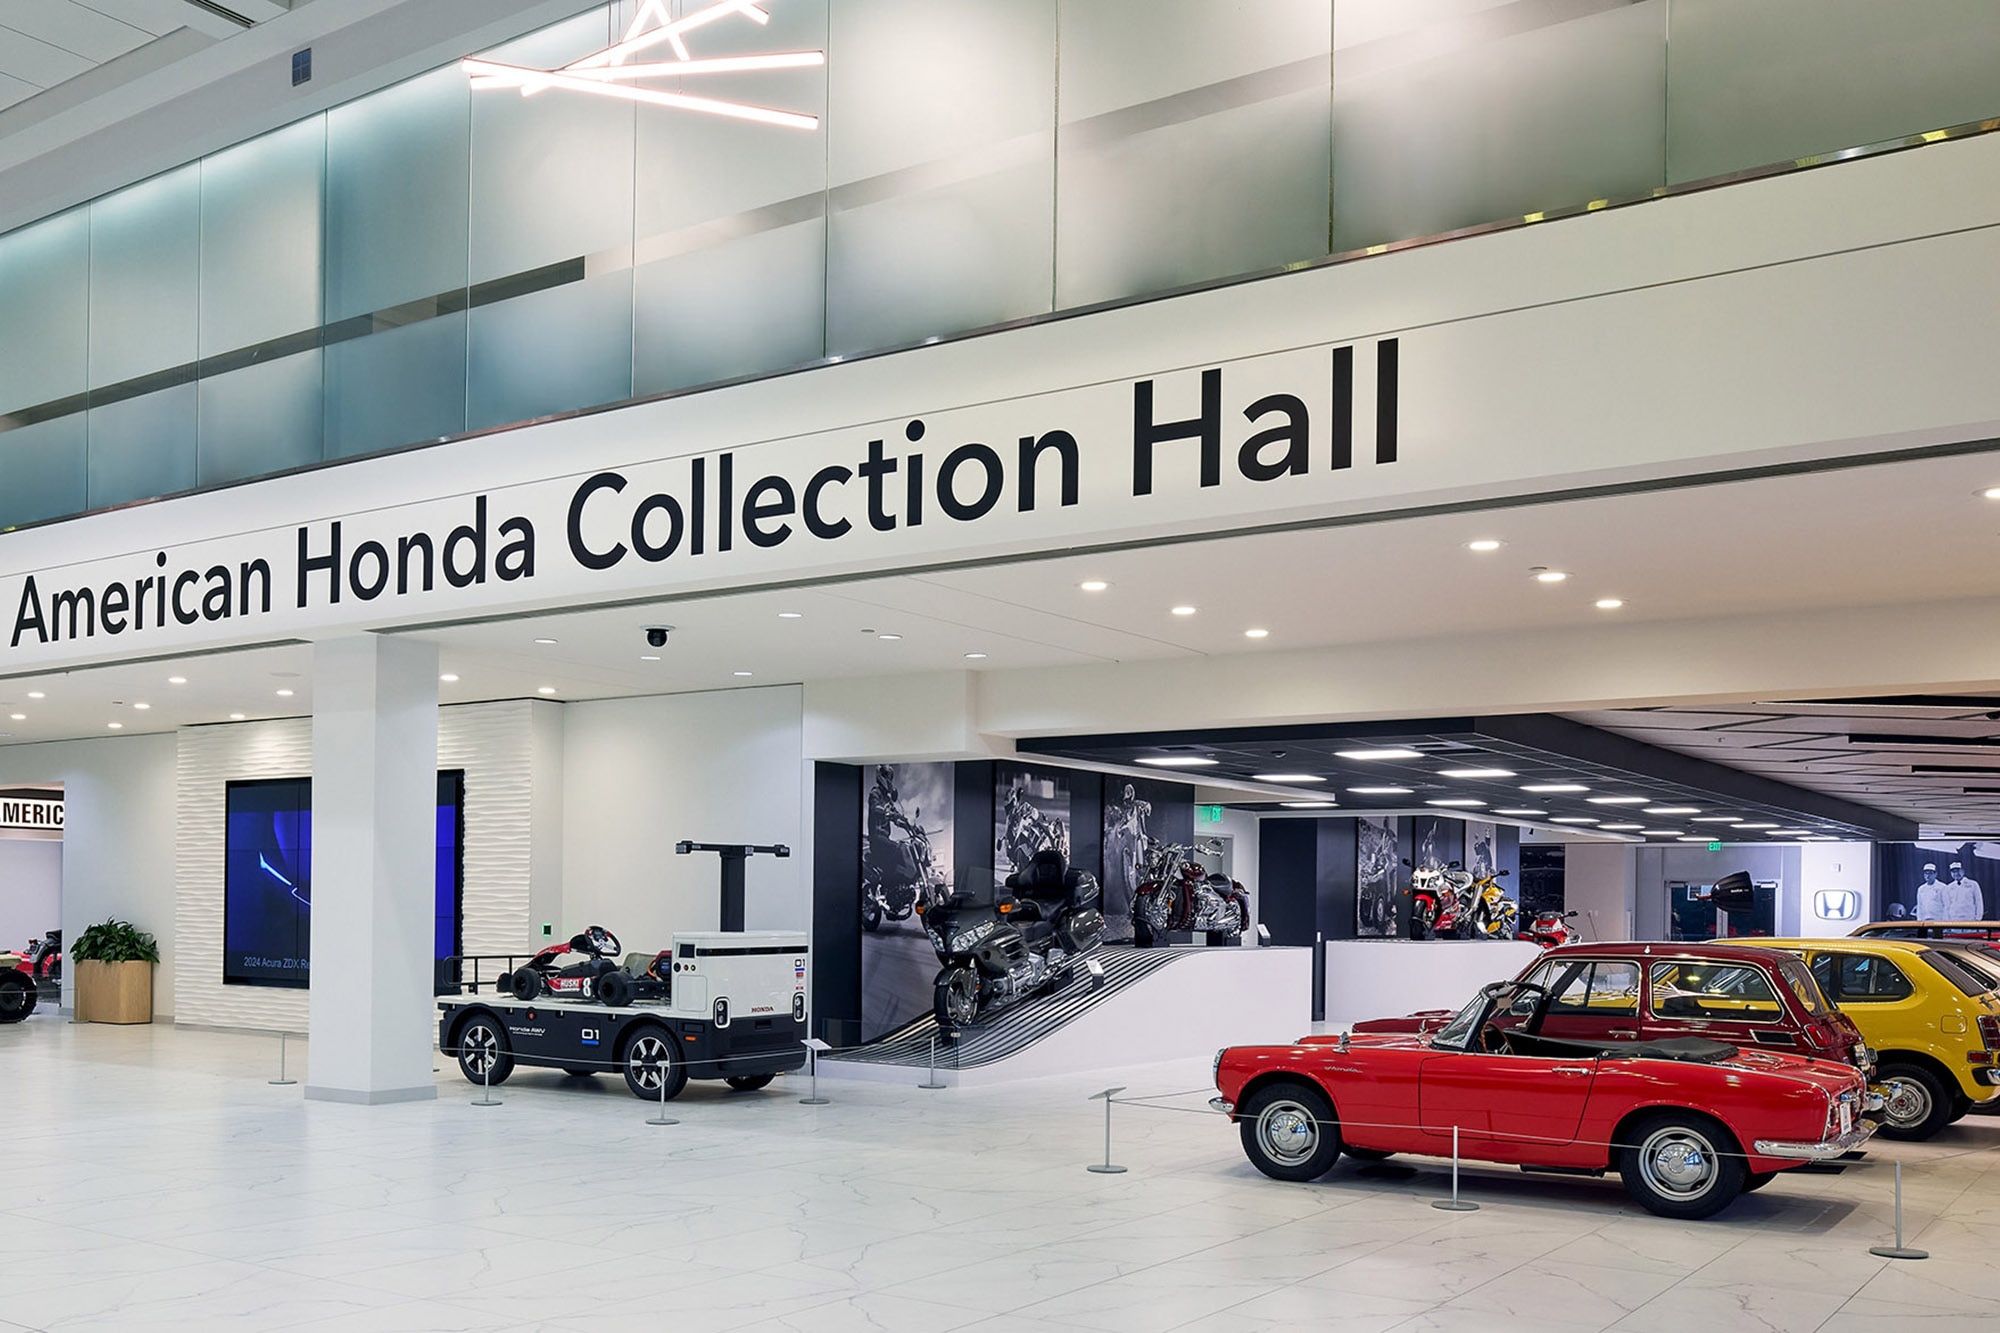 American Honda Collection Hall